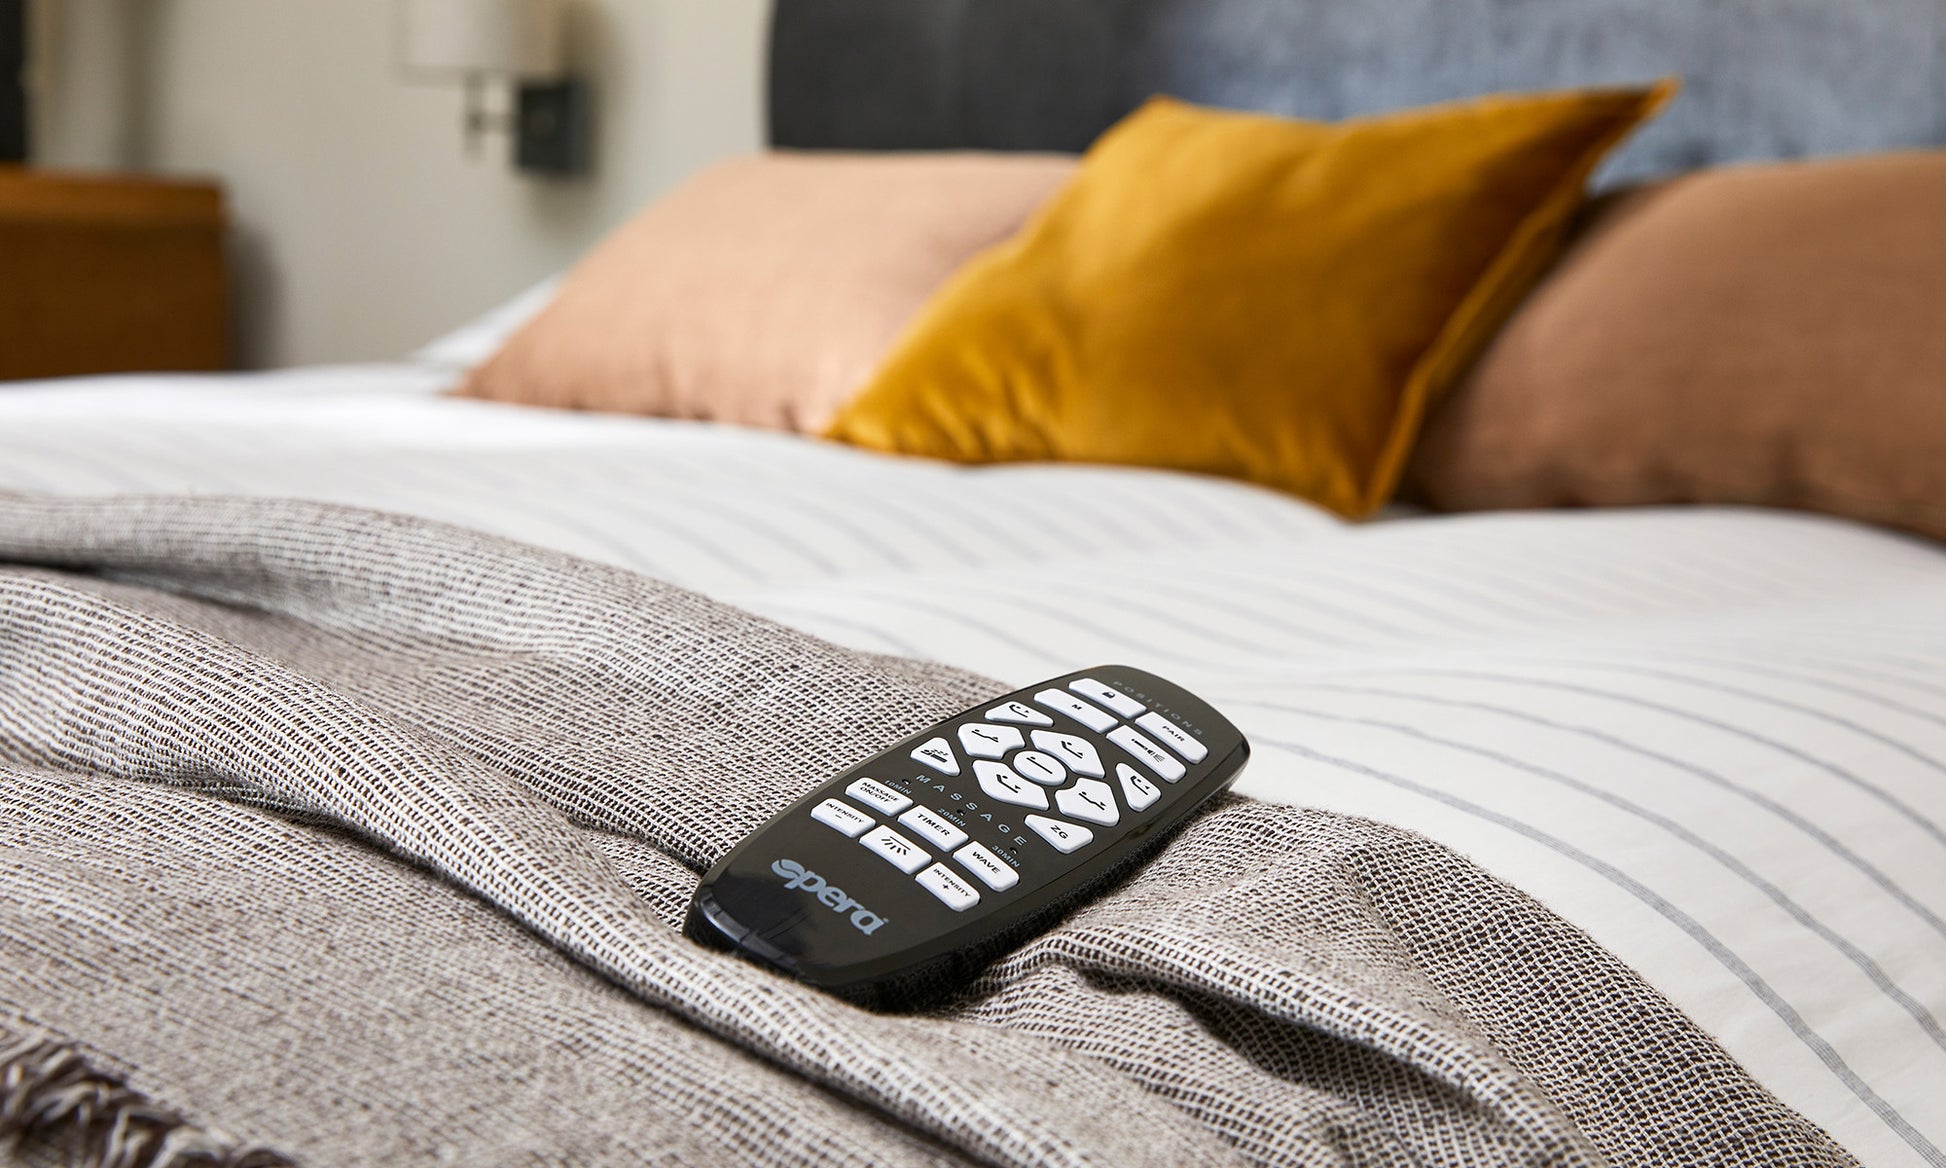 yorke adjustable bed handset